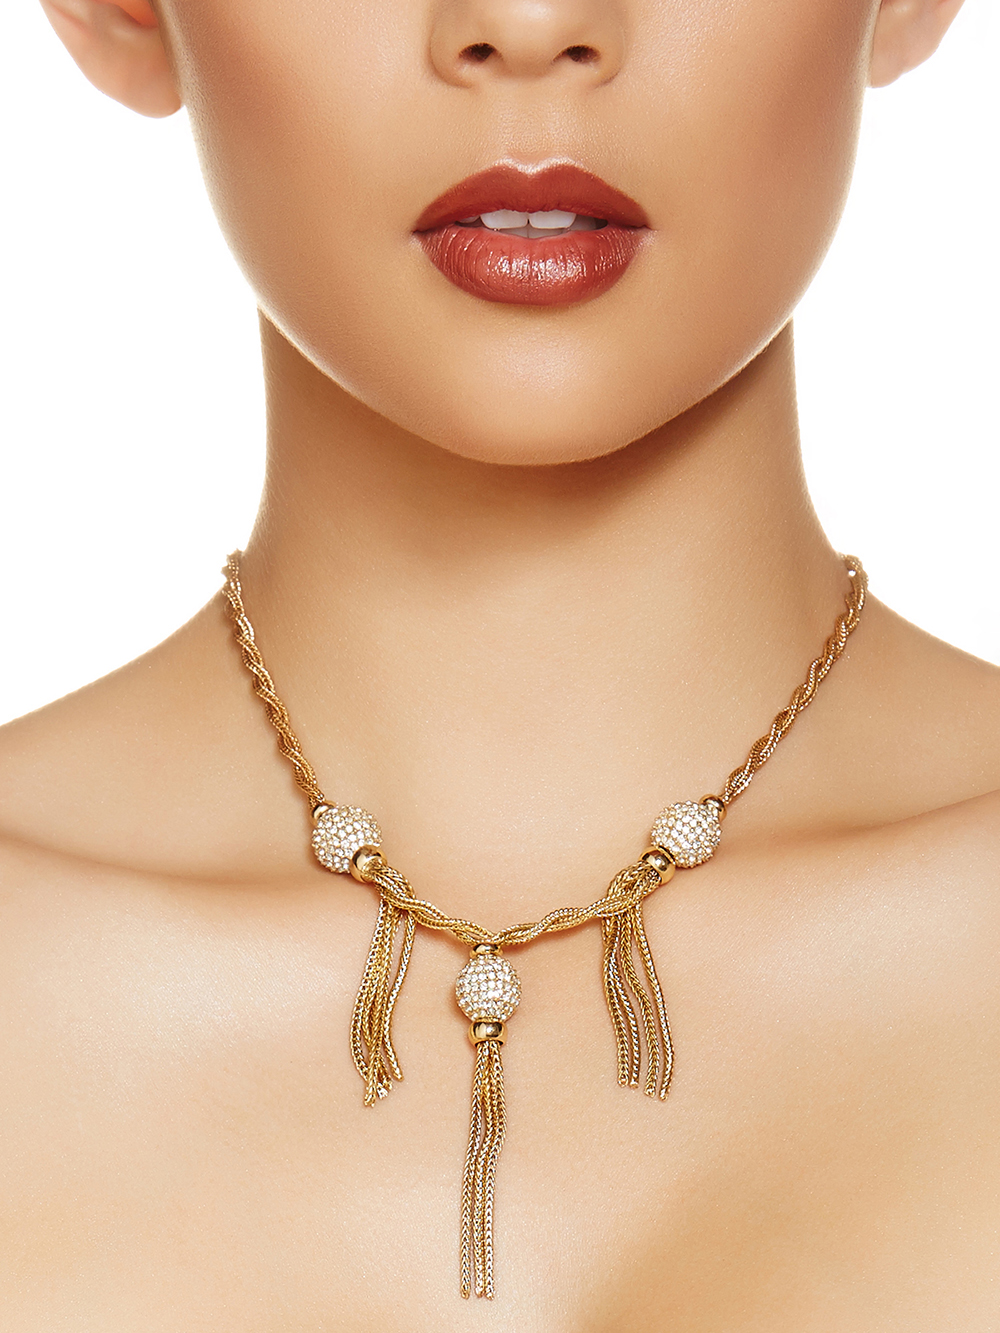 Dior Esther necklace, $1,890